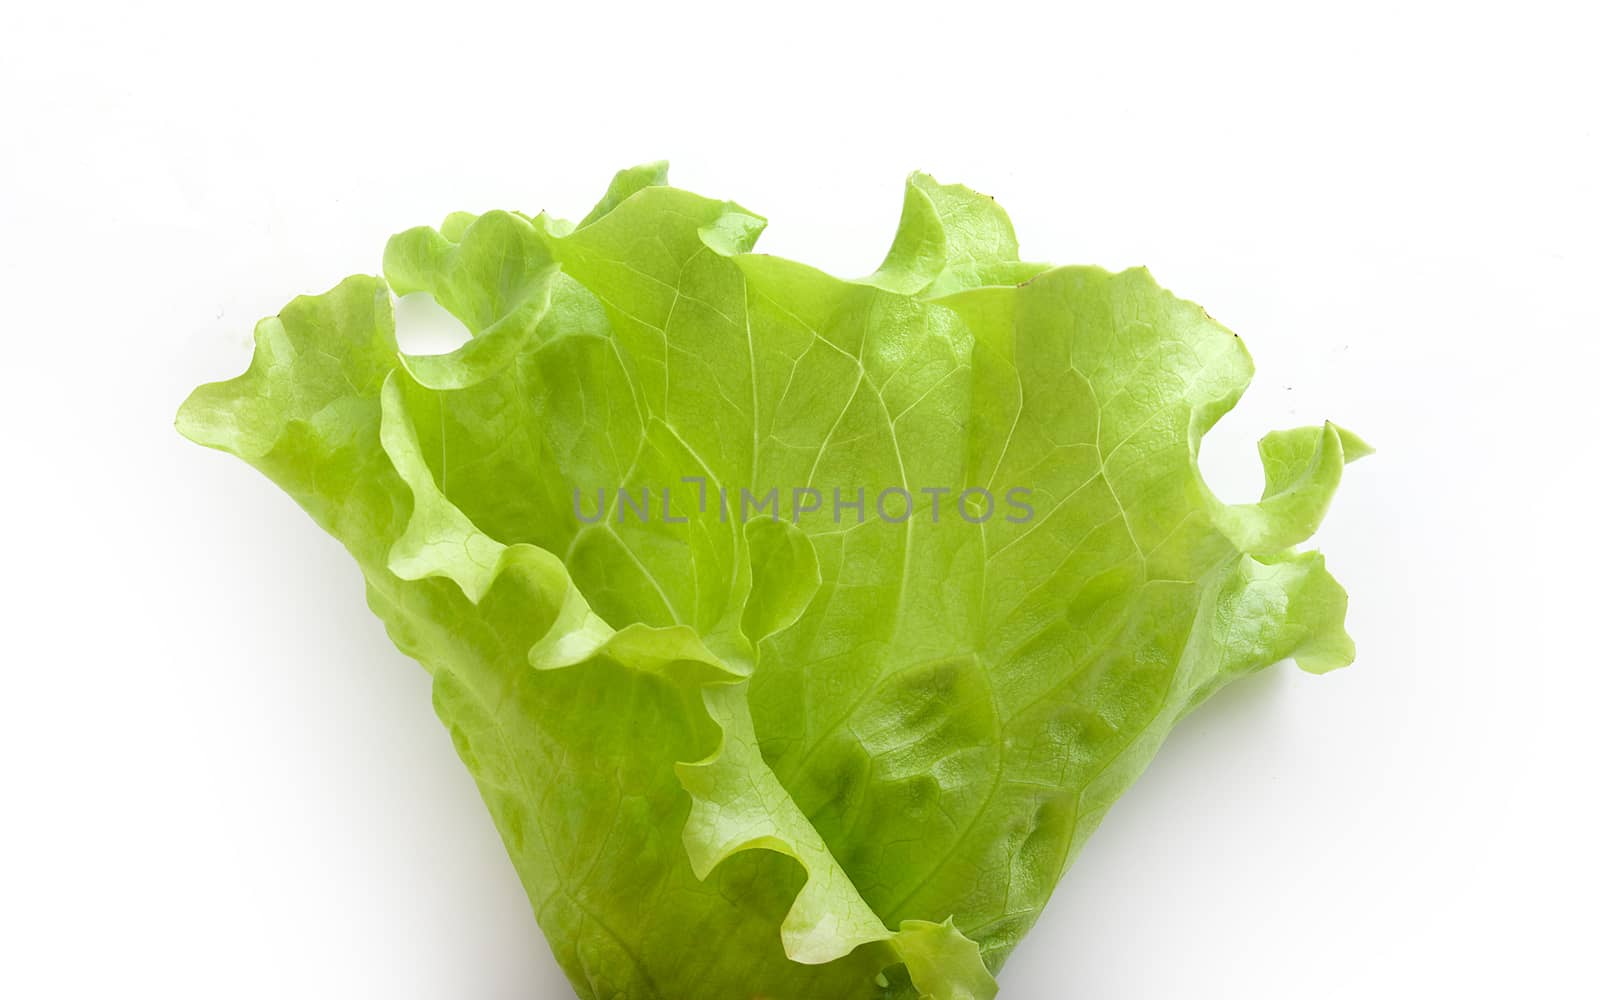 Fresh green lettuce by Angorius